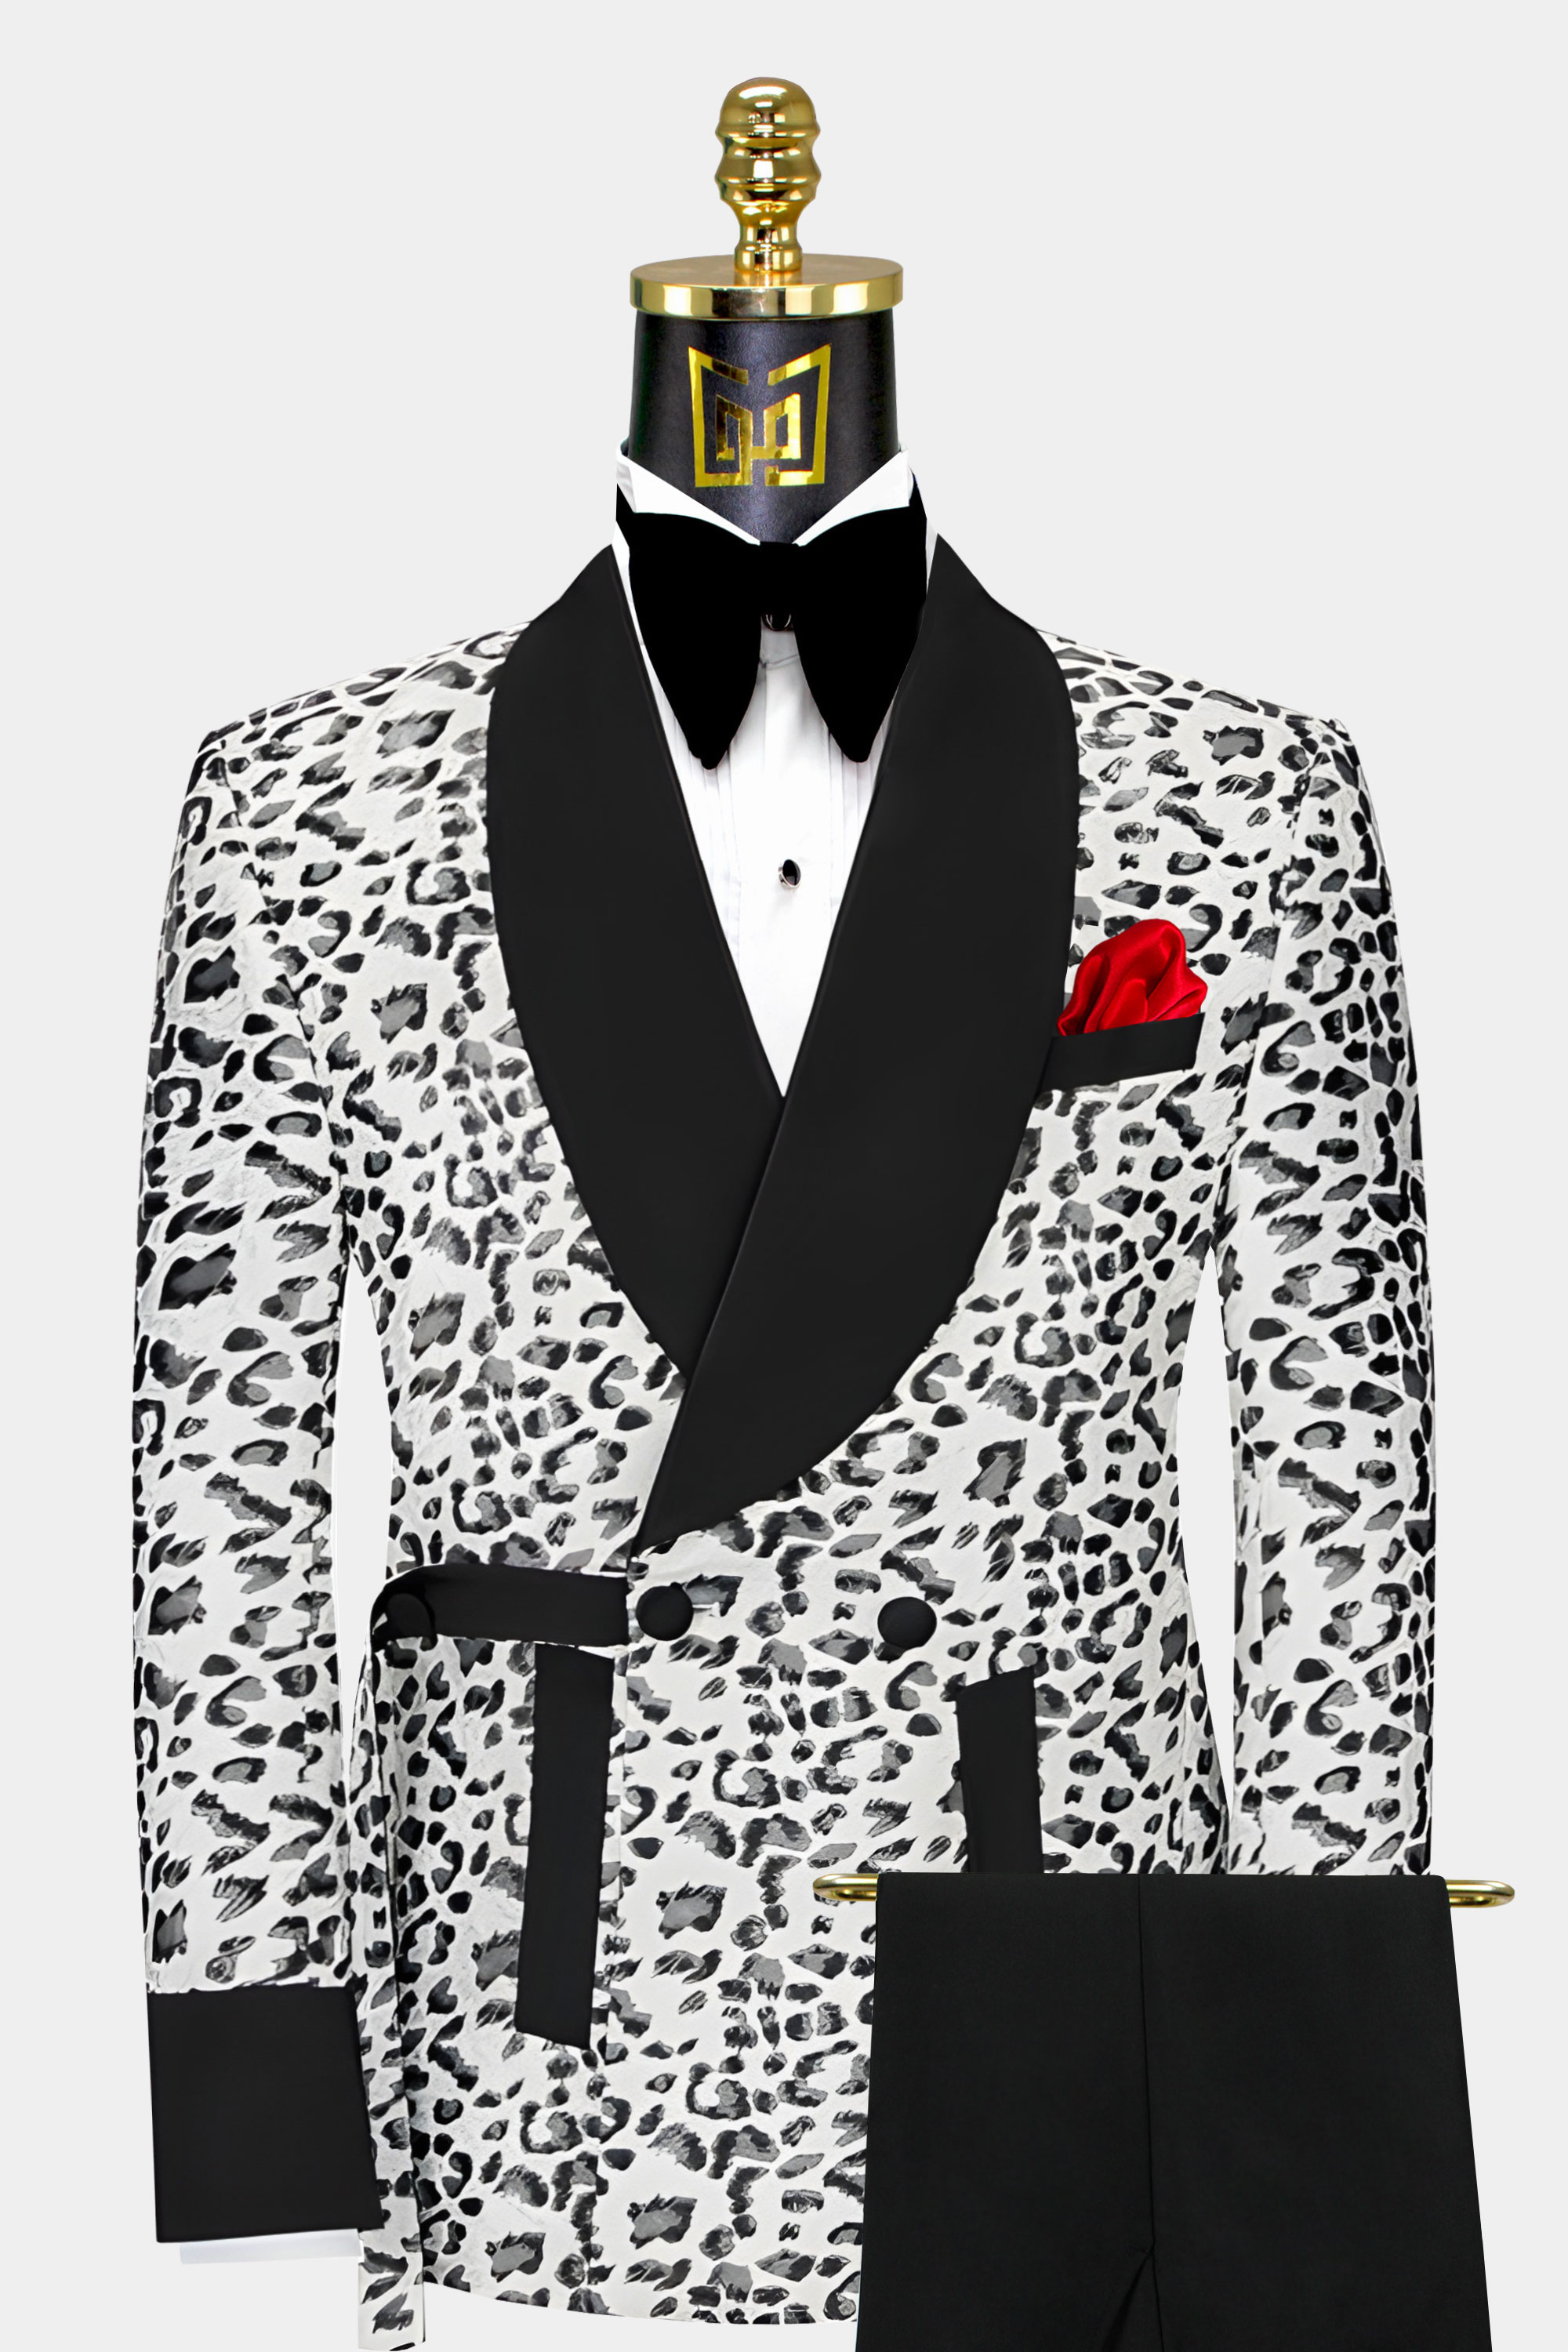 Black-and-White-Jaguar-Tuxedo-Suit-Leopard-Suit-from-Gentlemansguru.com